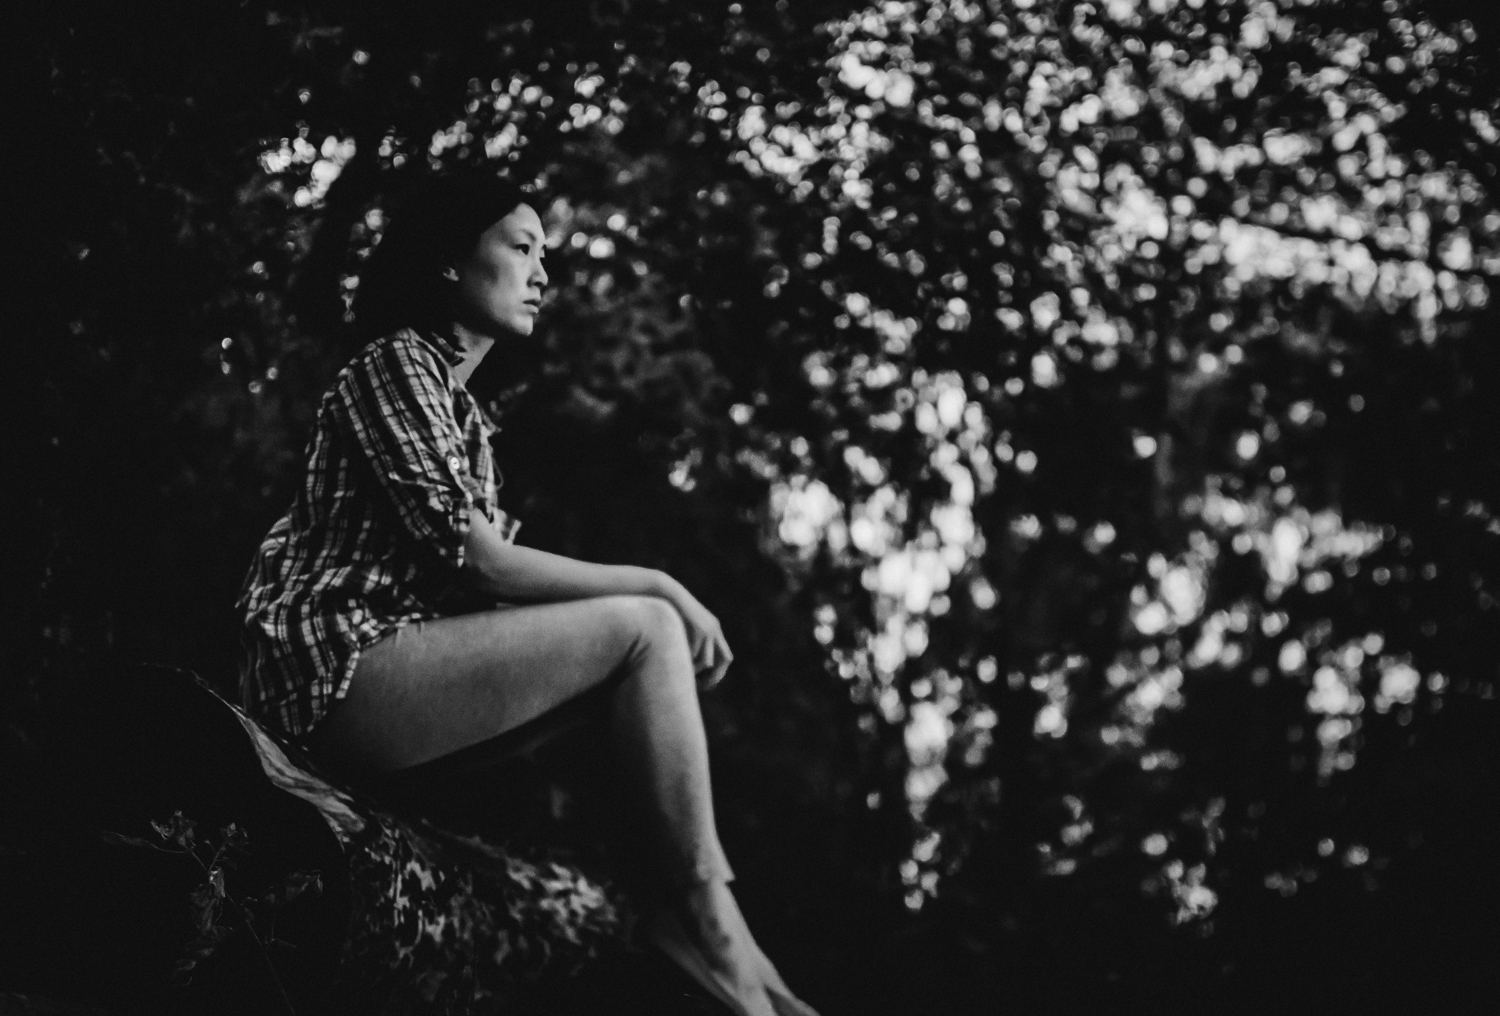 Self-portrait freelensed black and white photograph